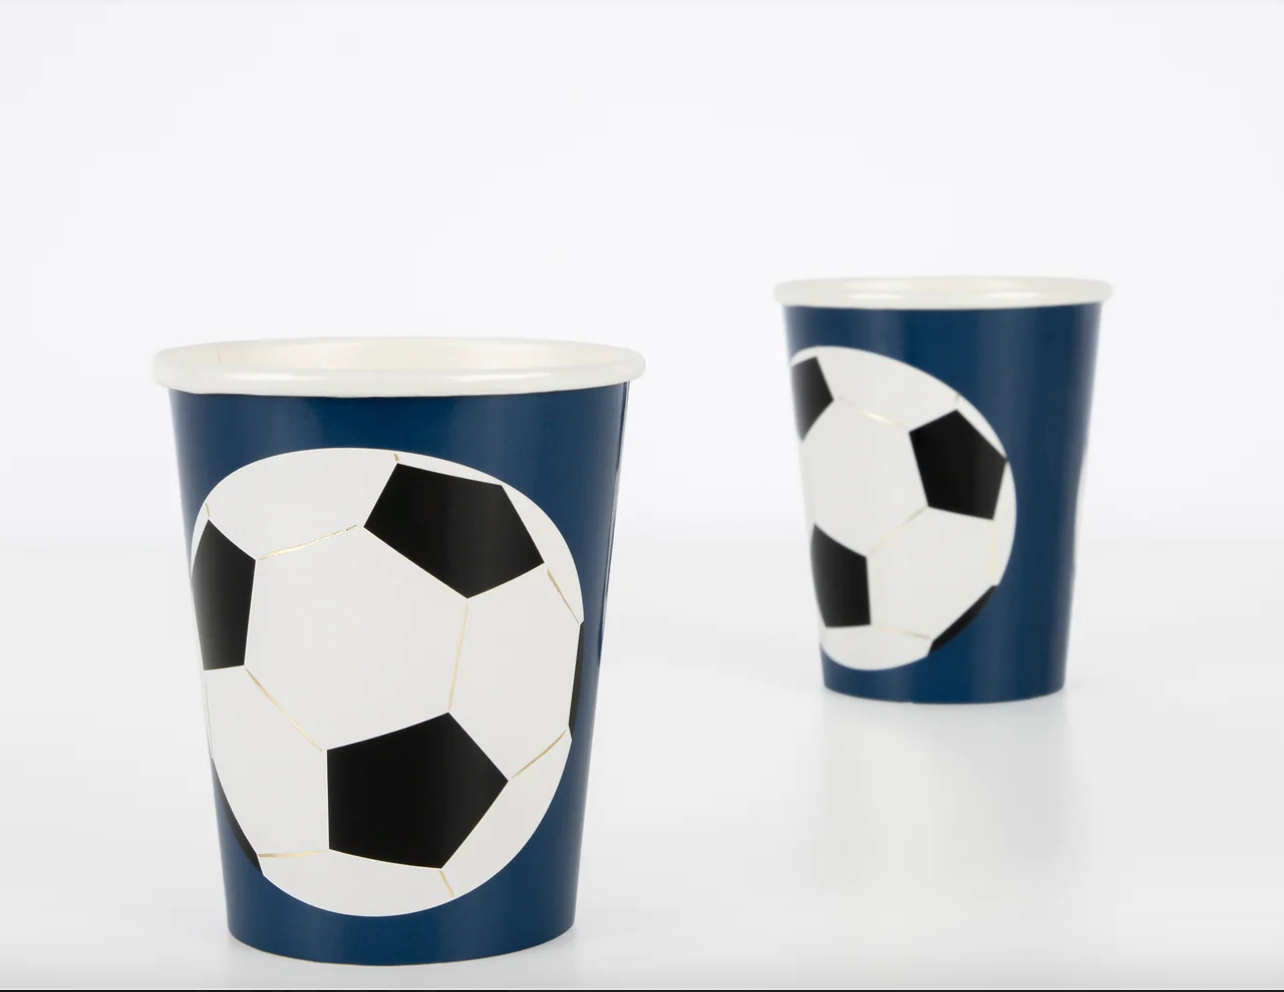 Soccer Cups (x 8)